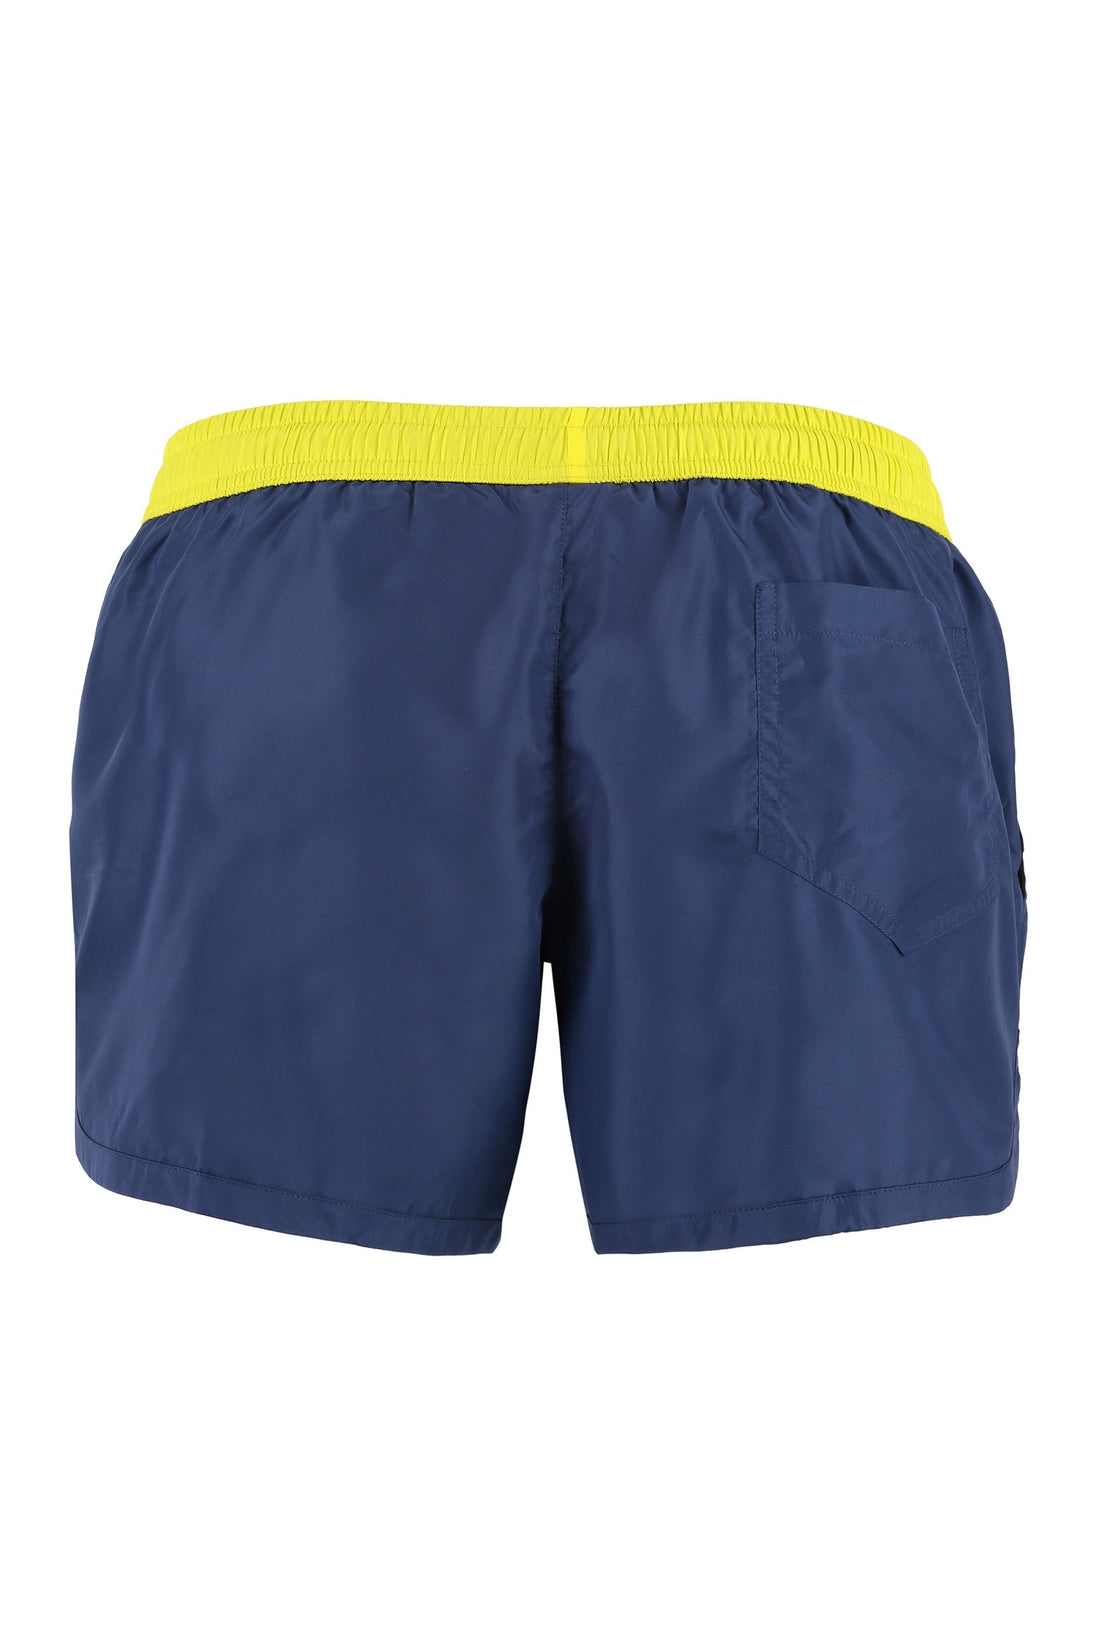 Moschino-OUTLET-SALE-Logo print swim shorts-ARCHIVIST